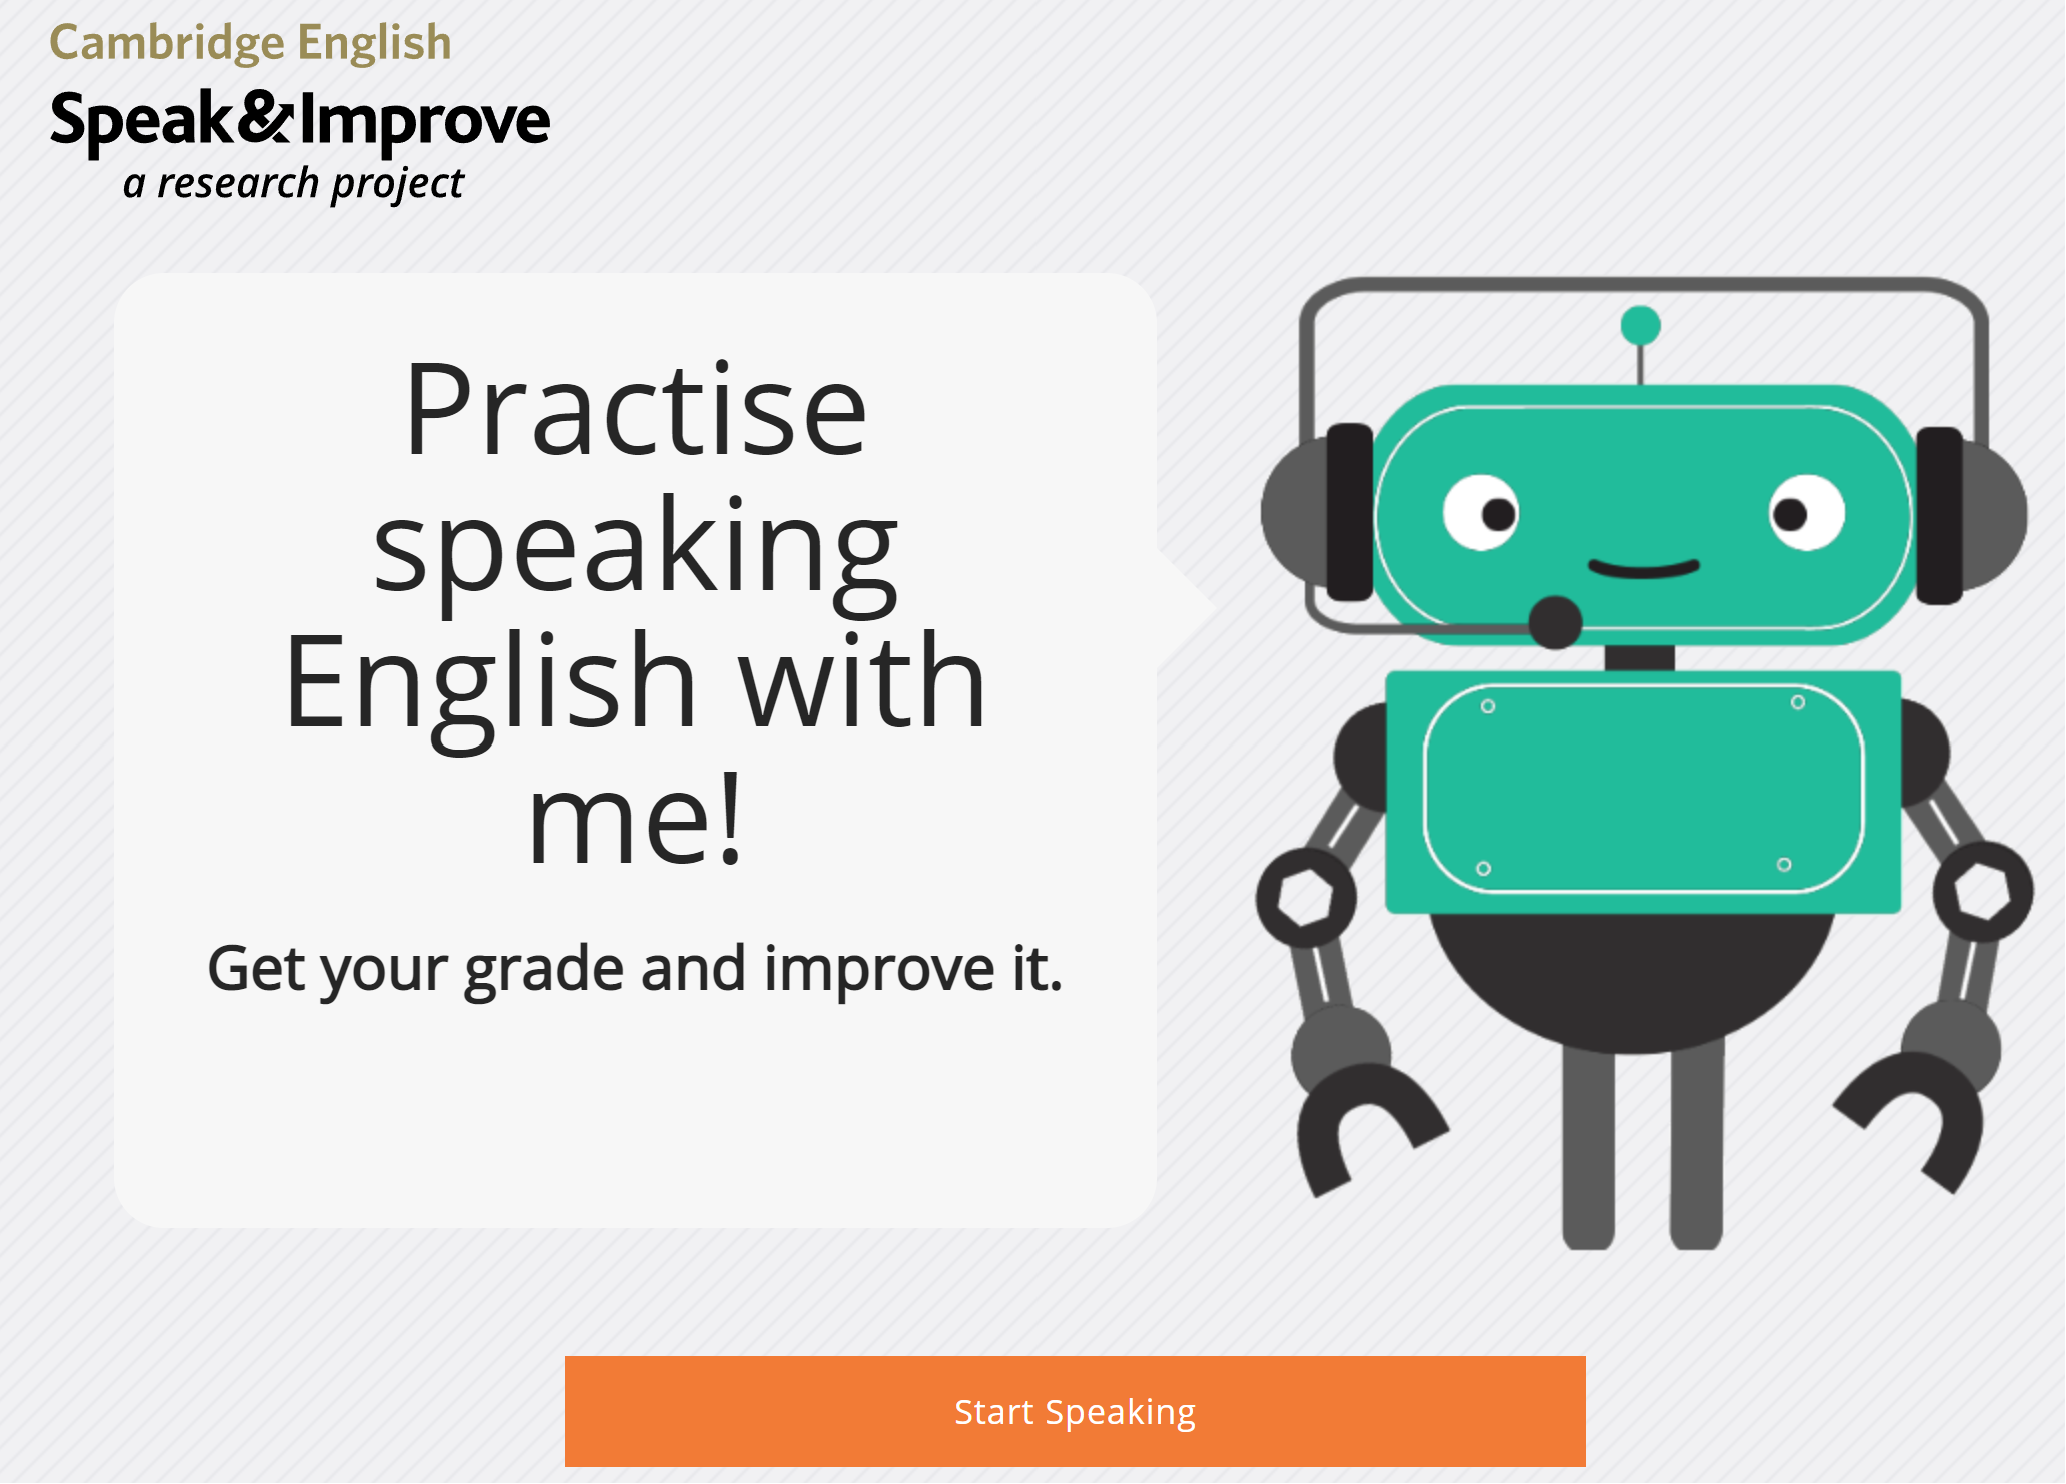 Speak & Improve-剑桥大学免费口语练习机器人